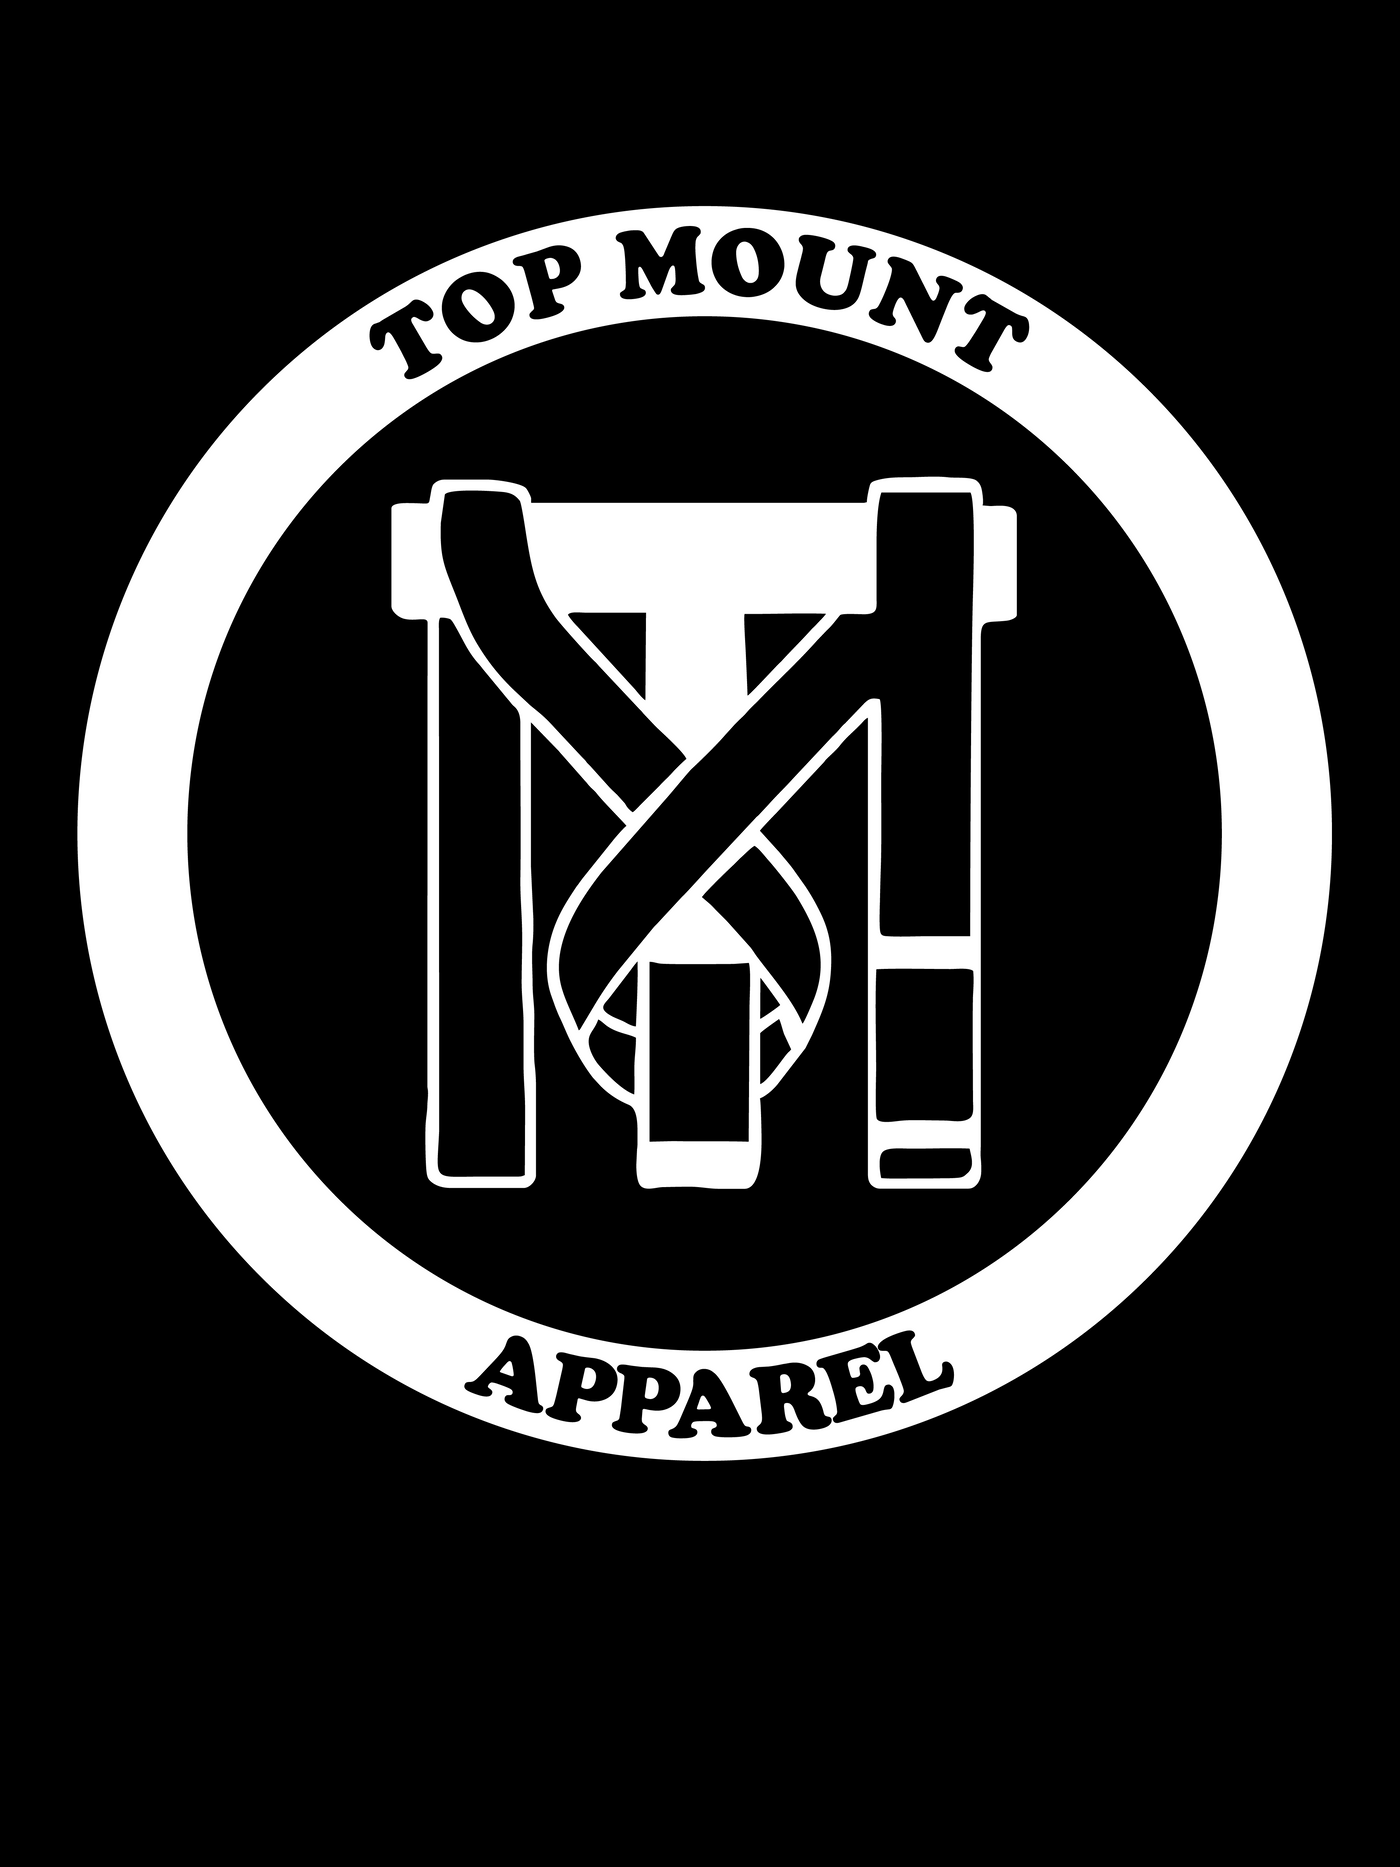 Top Mount Apparel Vinyl Decal